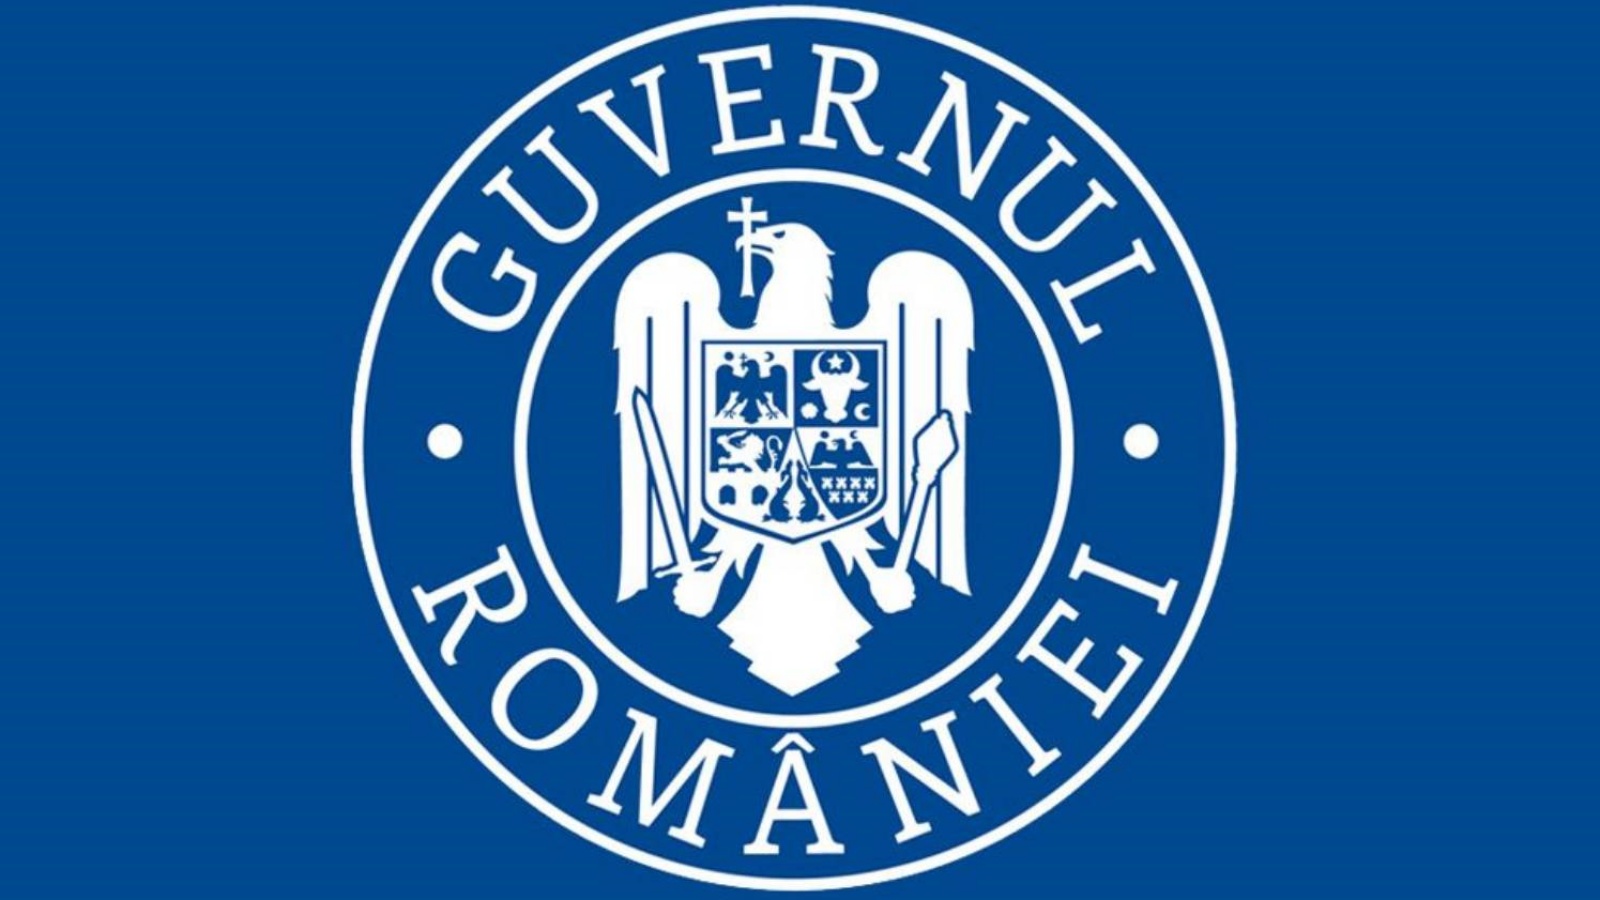 Guvernul Romaniei Oprirea Raspandirii Coronavirus va Reduce Restrictiile